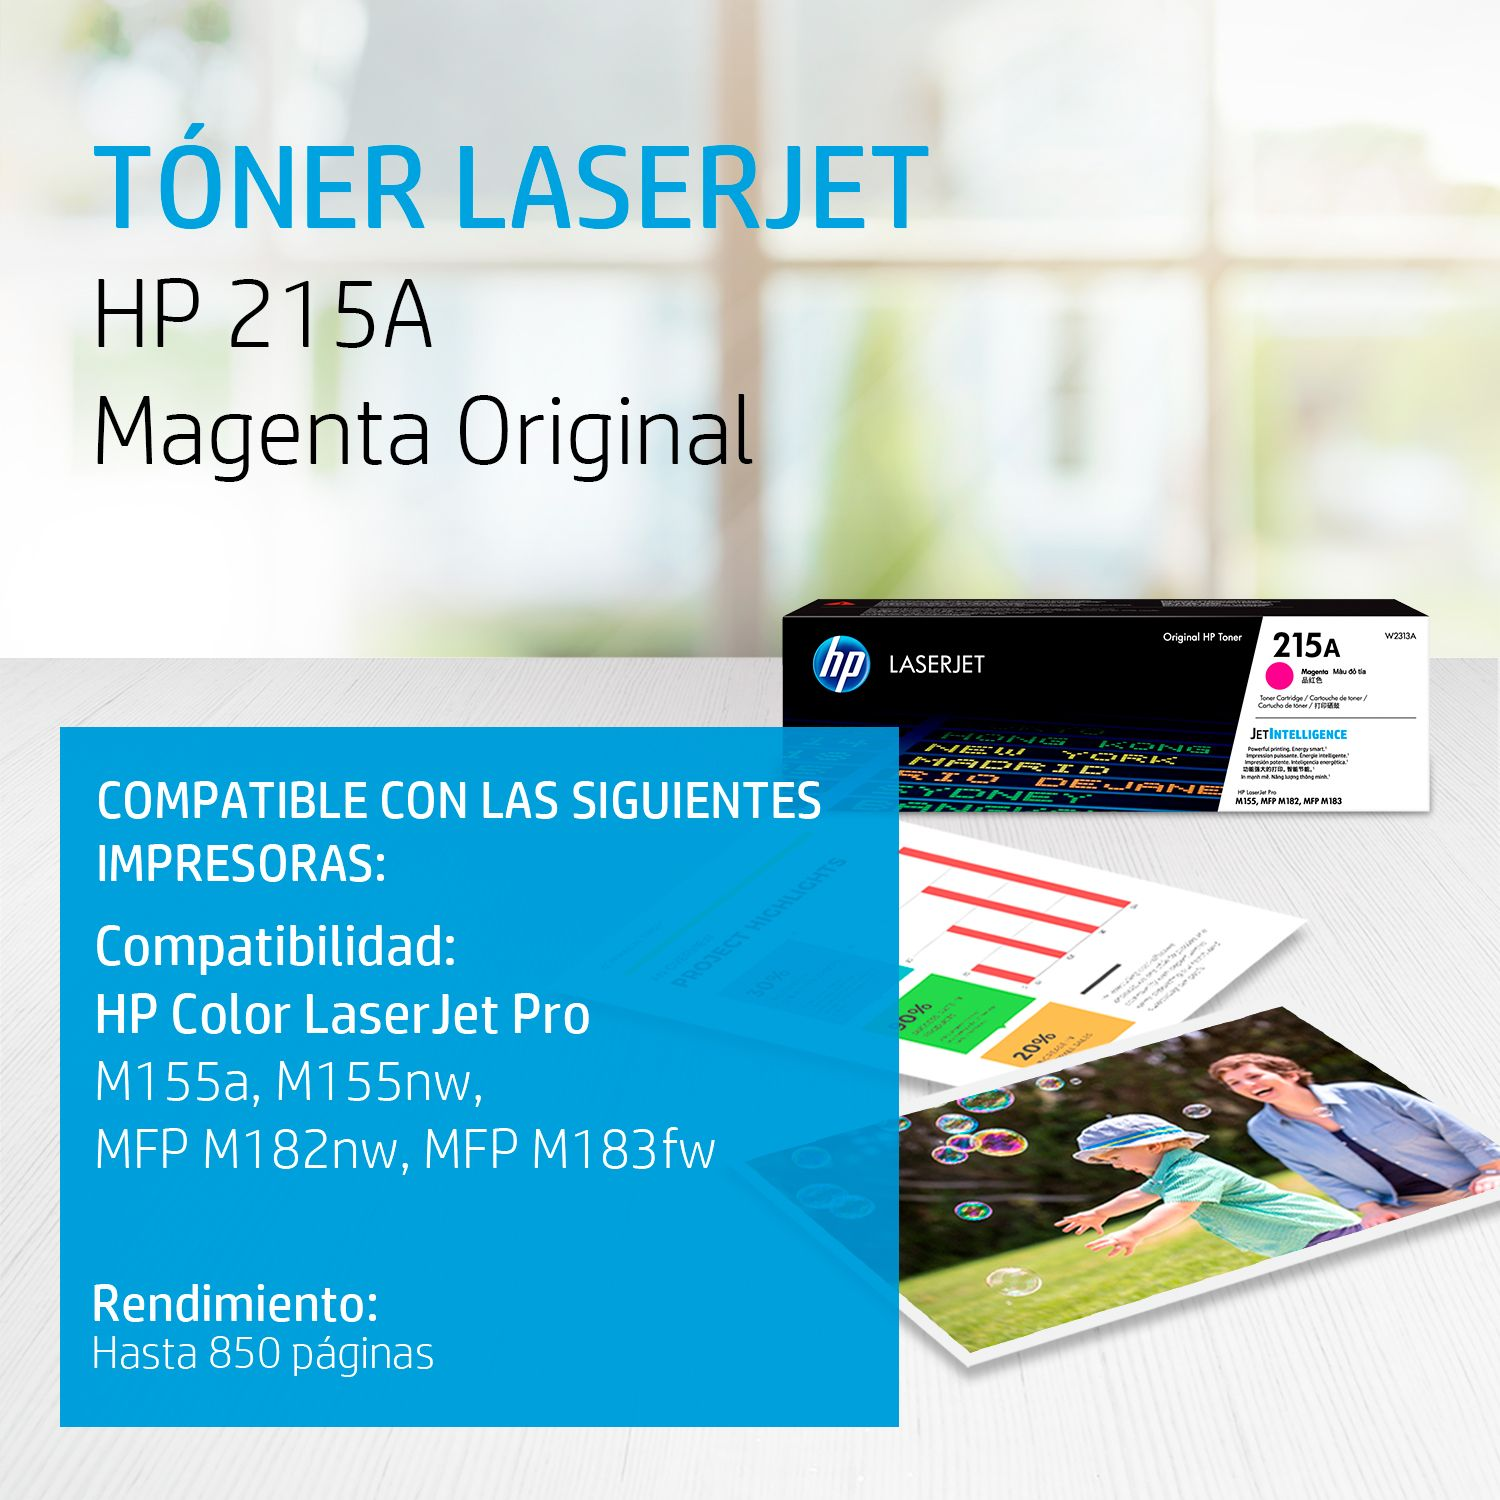 HP 215A - Magenta - Original - LaserJet - Toner Cartridge (W2313A)